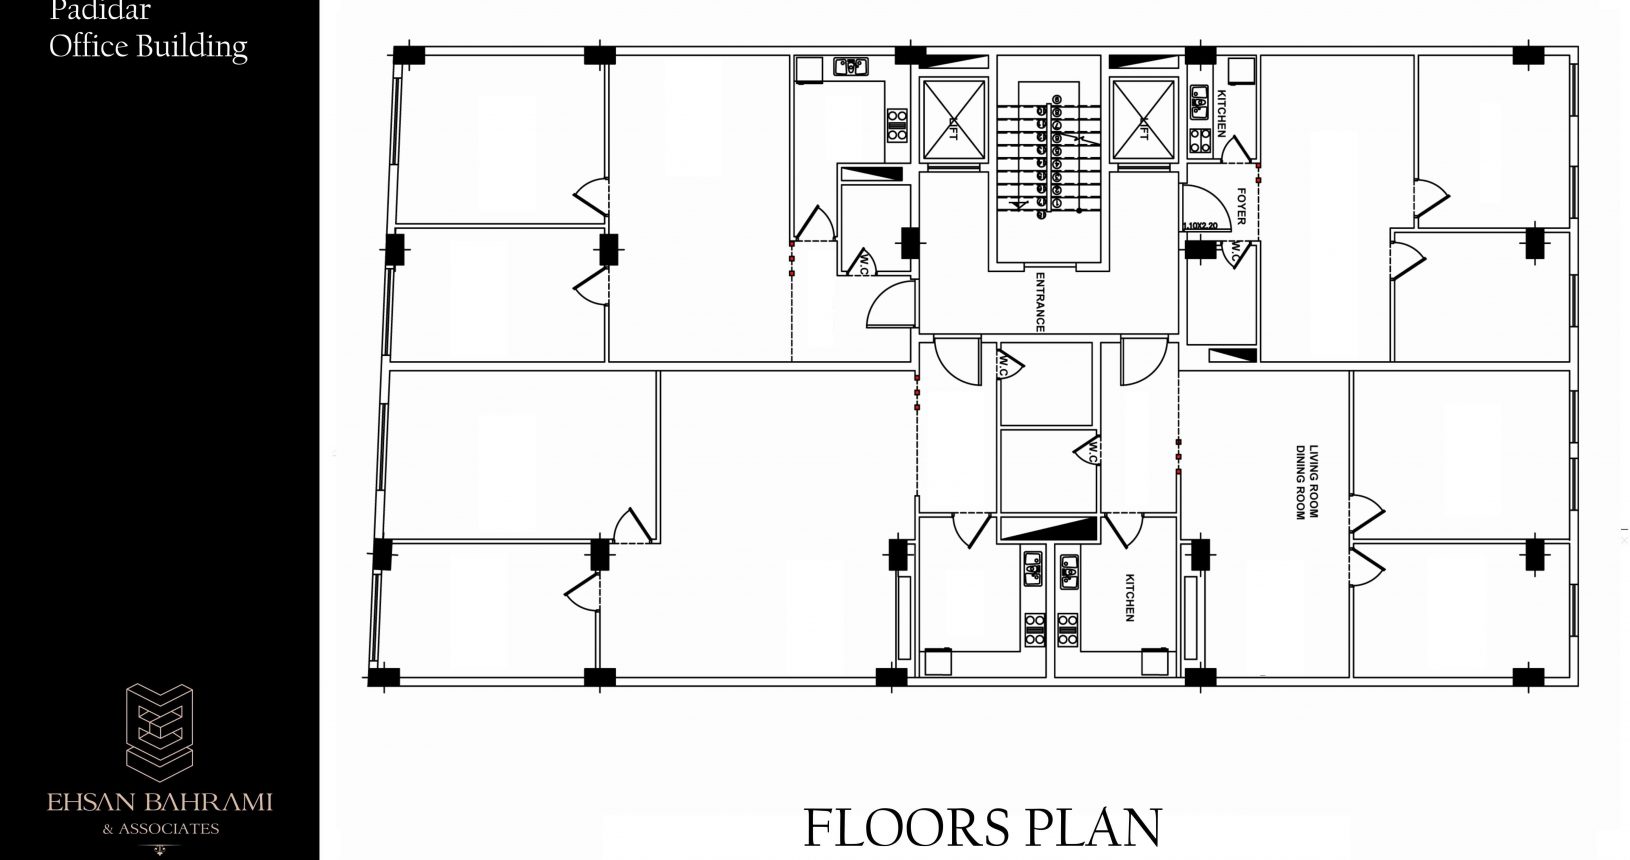 Padidar Office Building Floors Plan